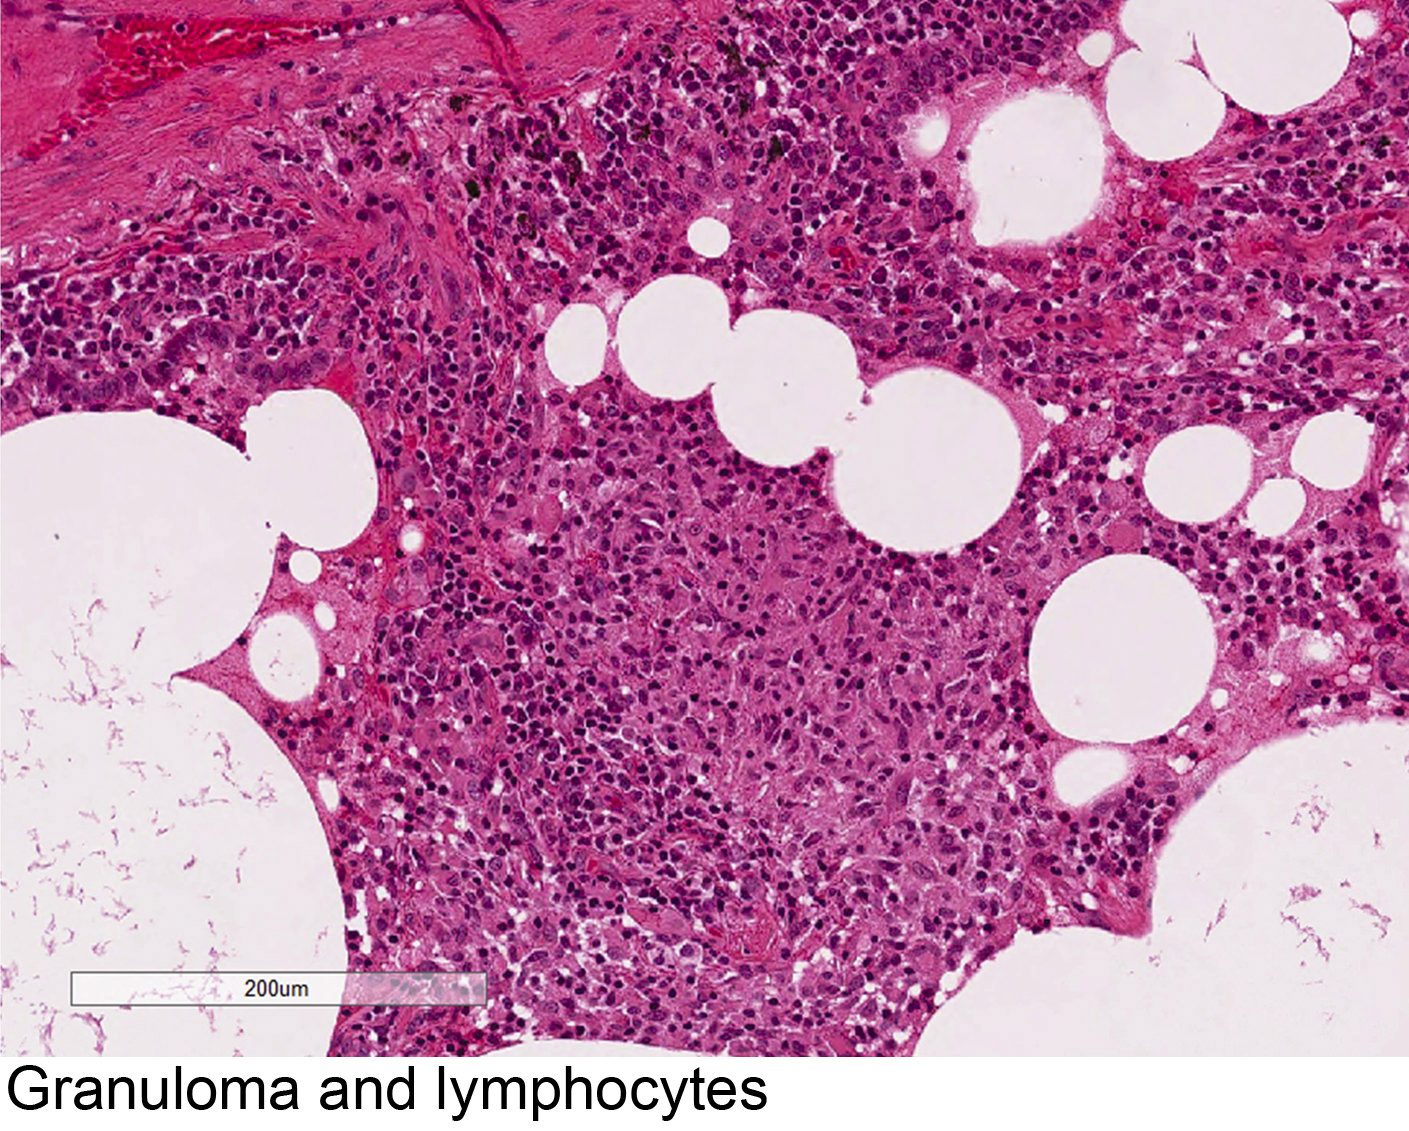 Granuloma and lymphocytes